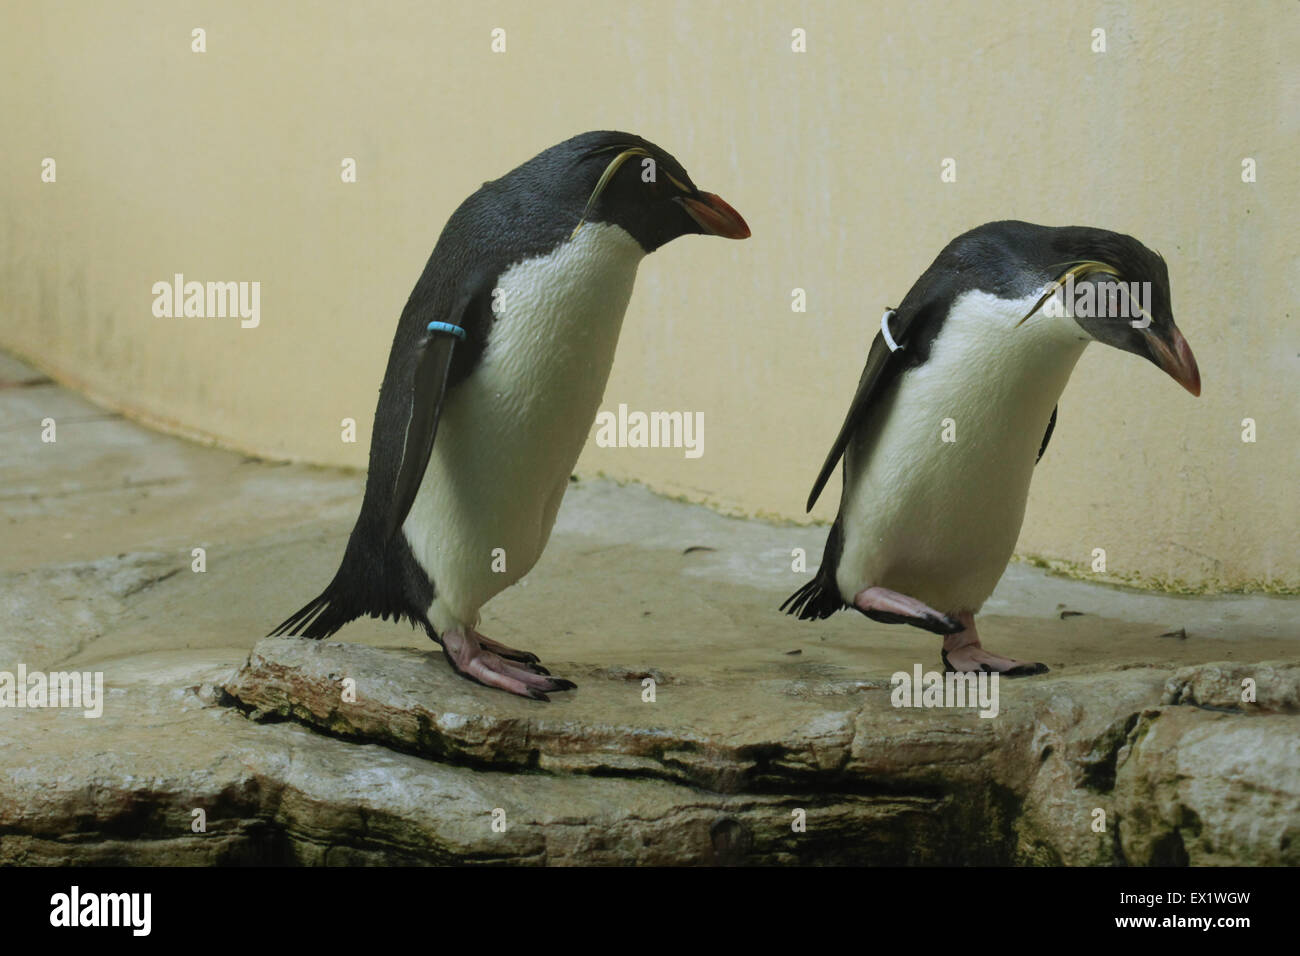 Northern rockhopper penguin (Eudyptes moseleyi) at Schönbrunn Zoo in Vienna, Austria. Stock Photo